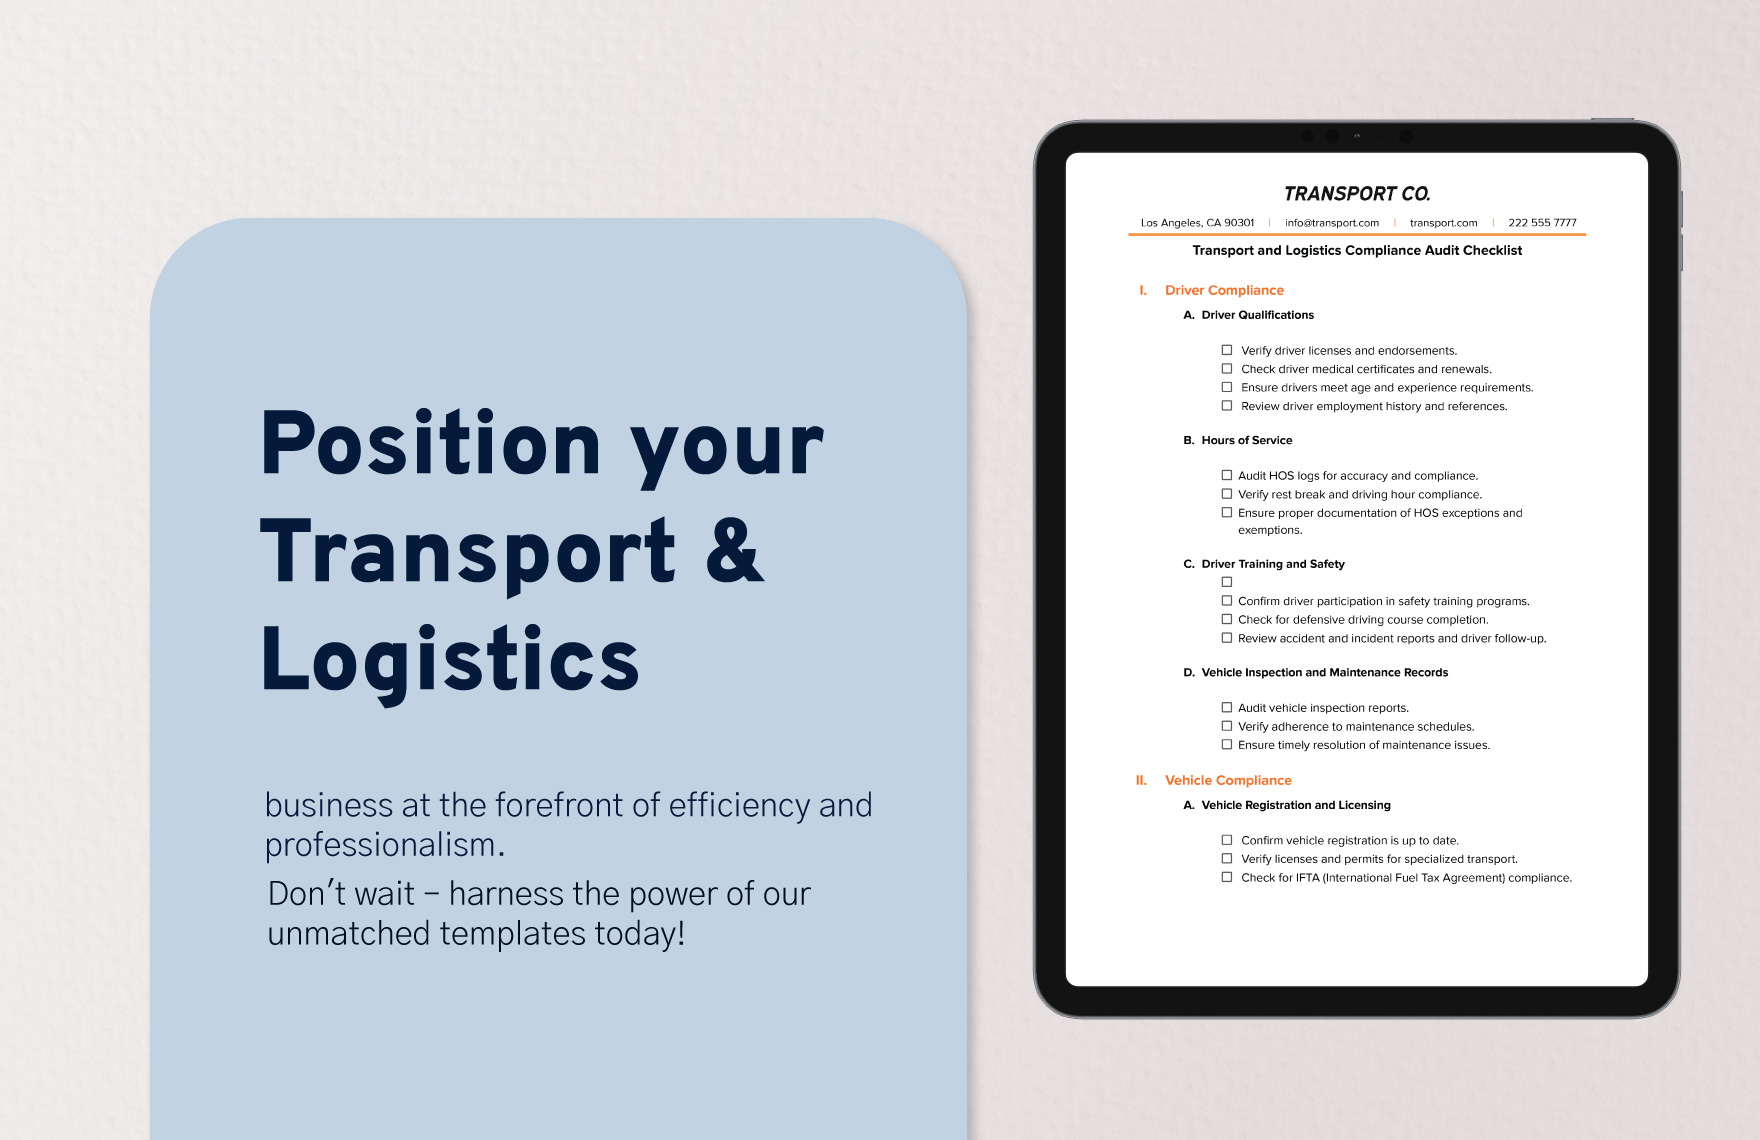 Transport and Logistics Compliance Audit Checklist Template